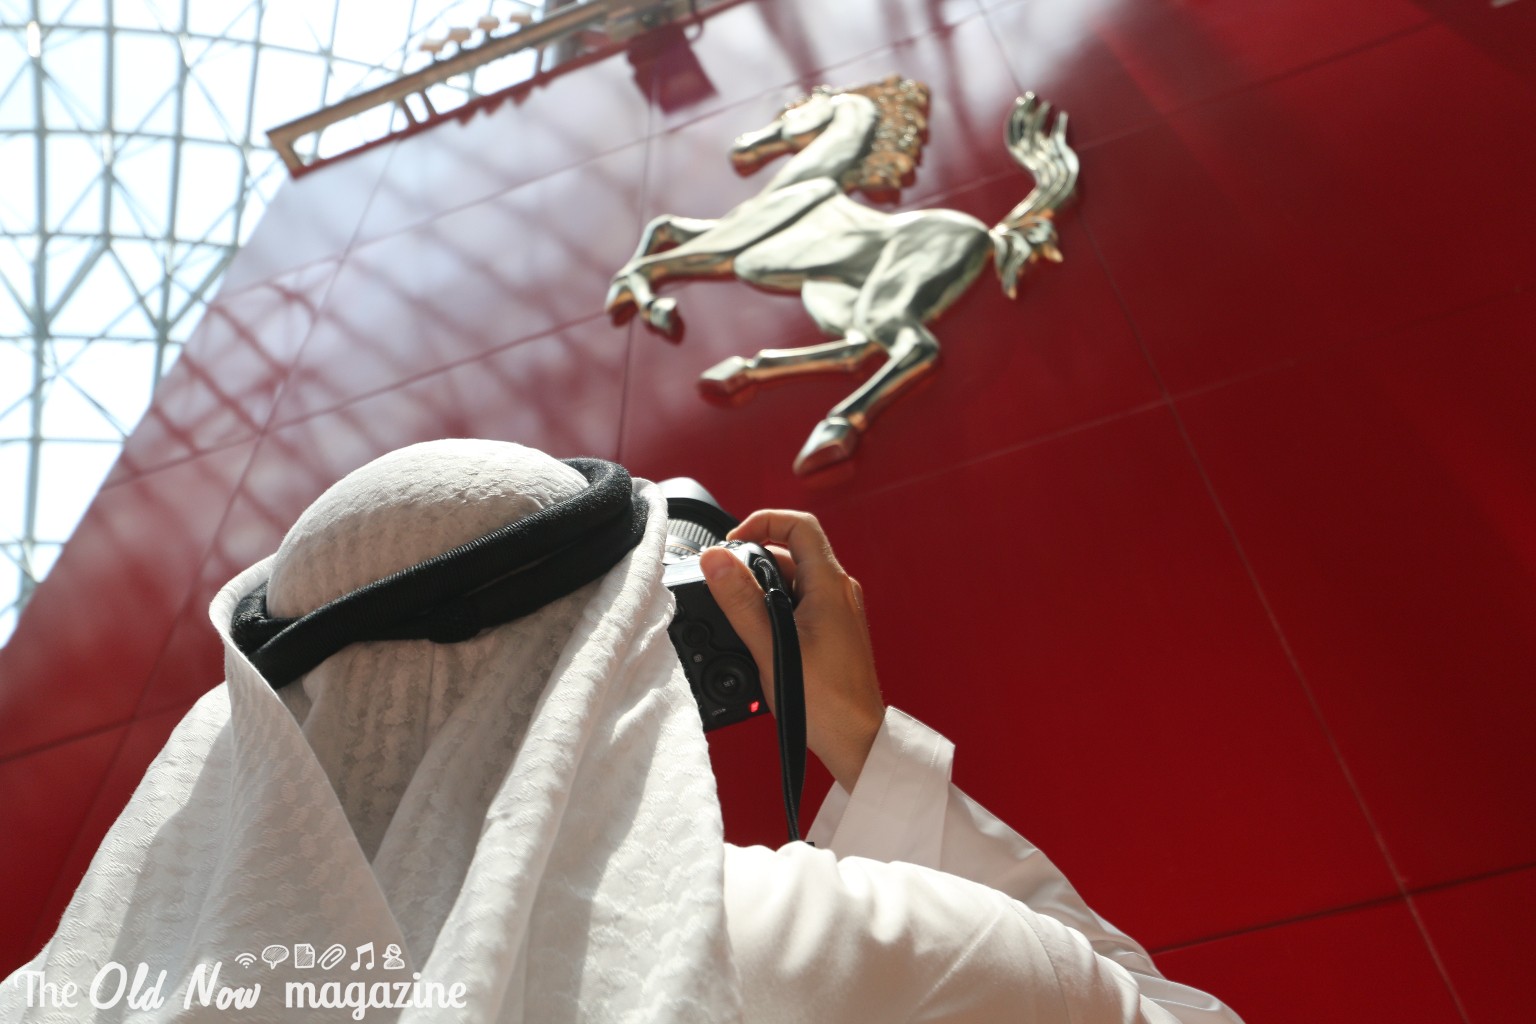 Abu Dhabi Ferrari World THEOLDNOW (12)